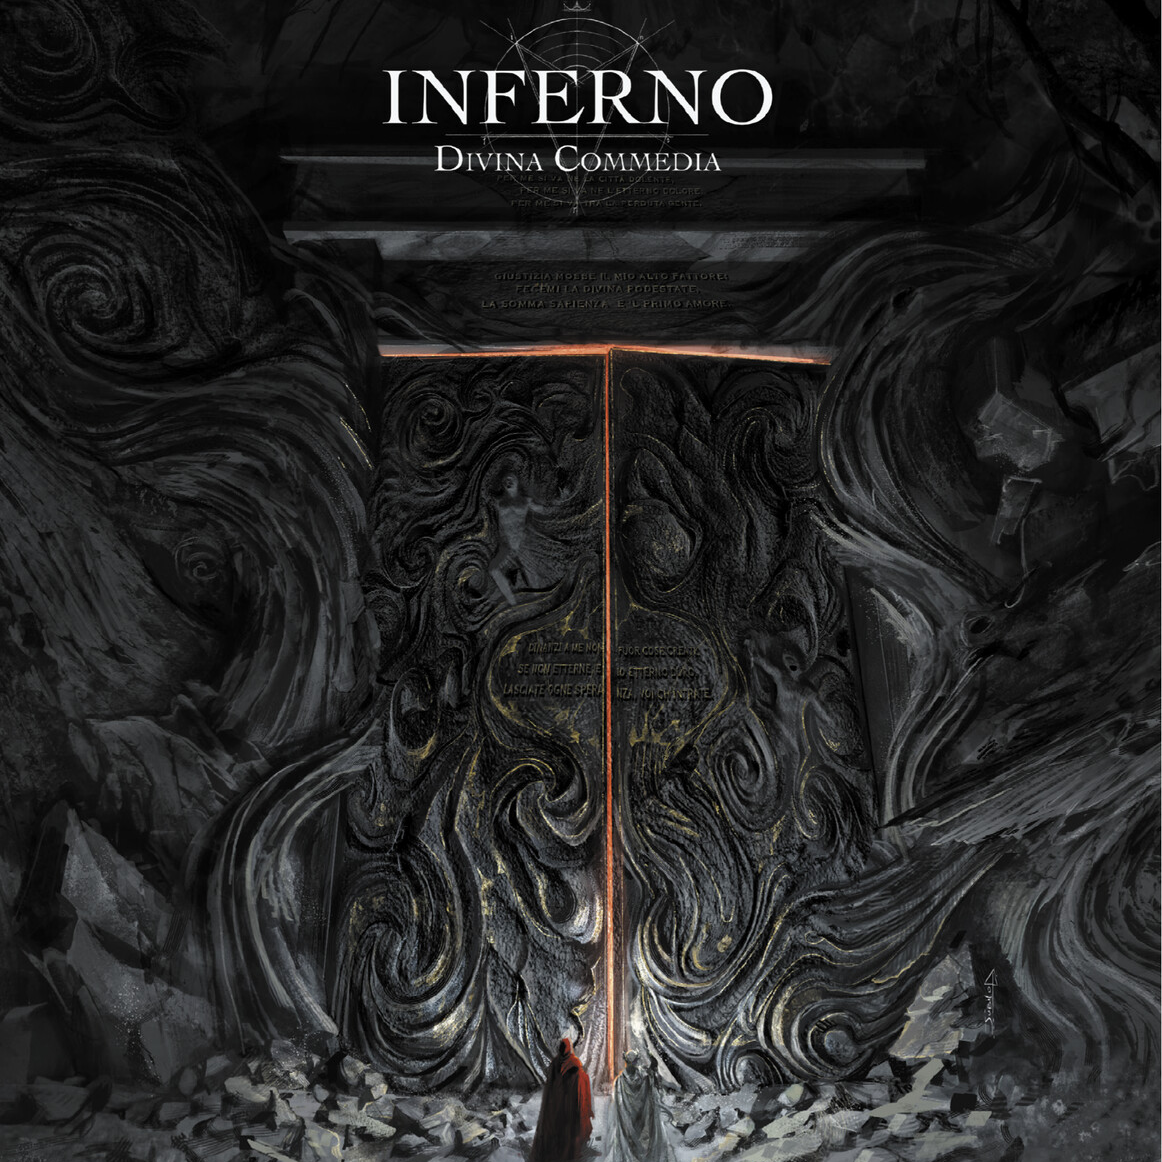 Inferno - Dante's Guide to Hell – RPG - Acheron Books